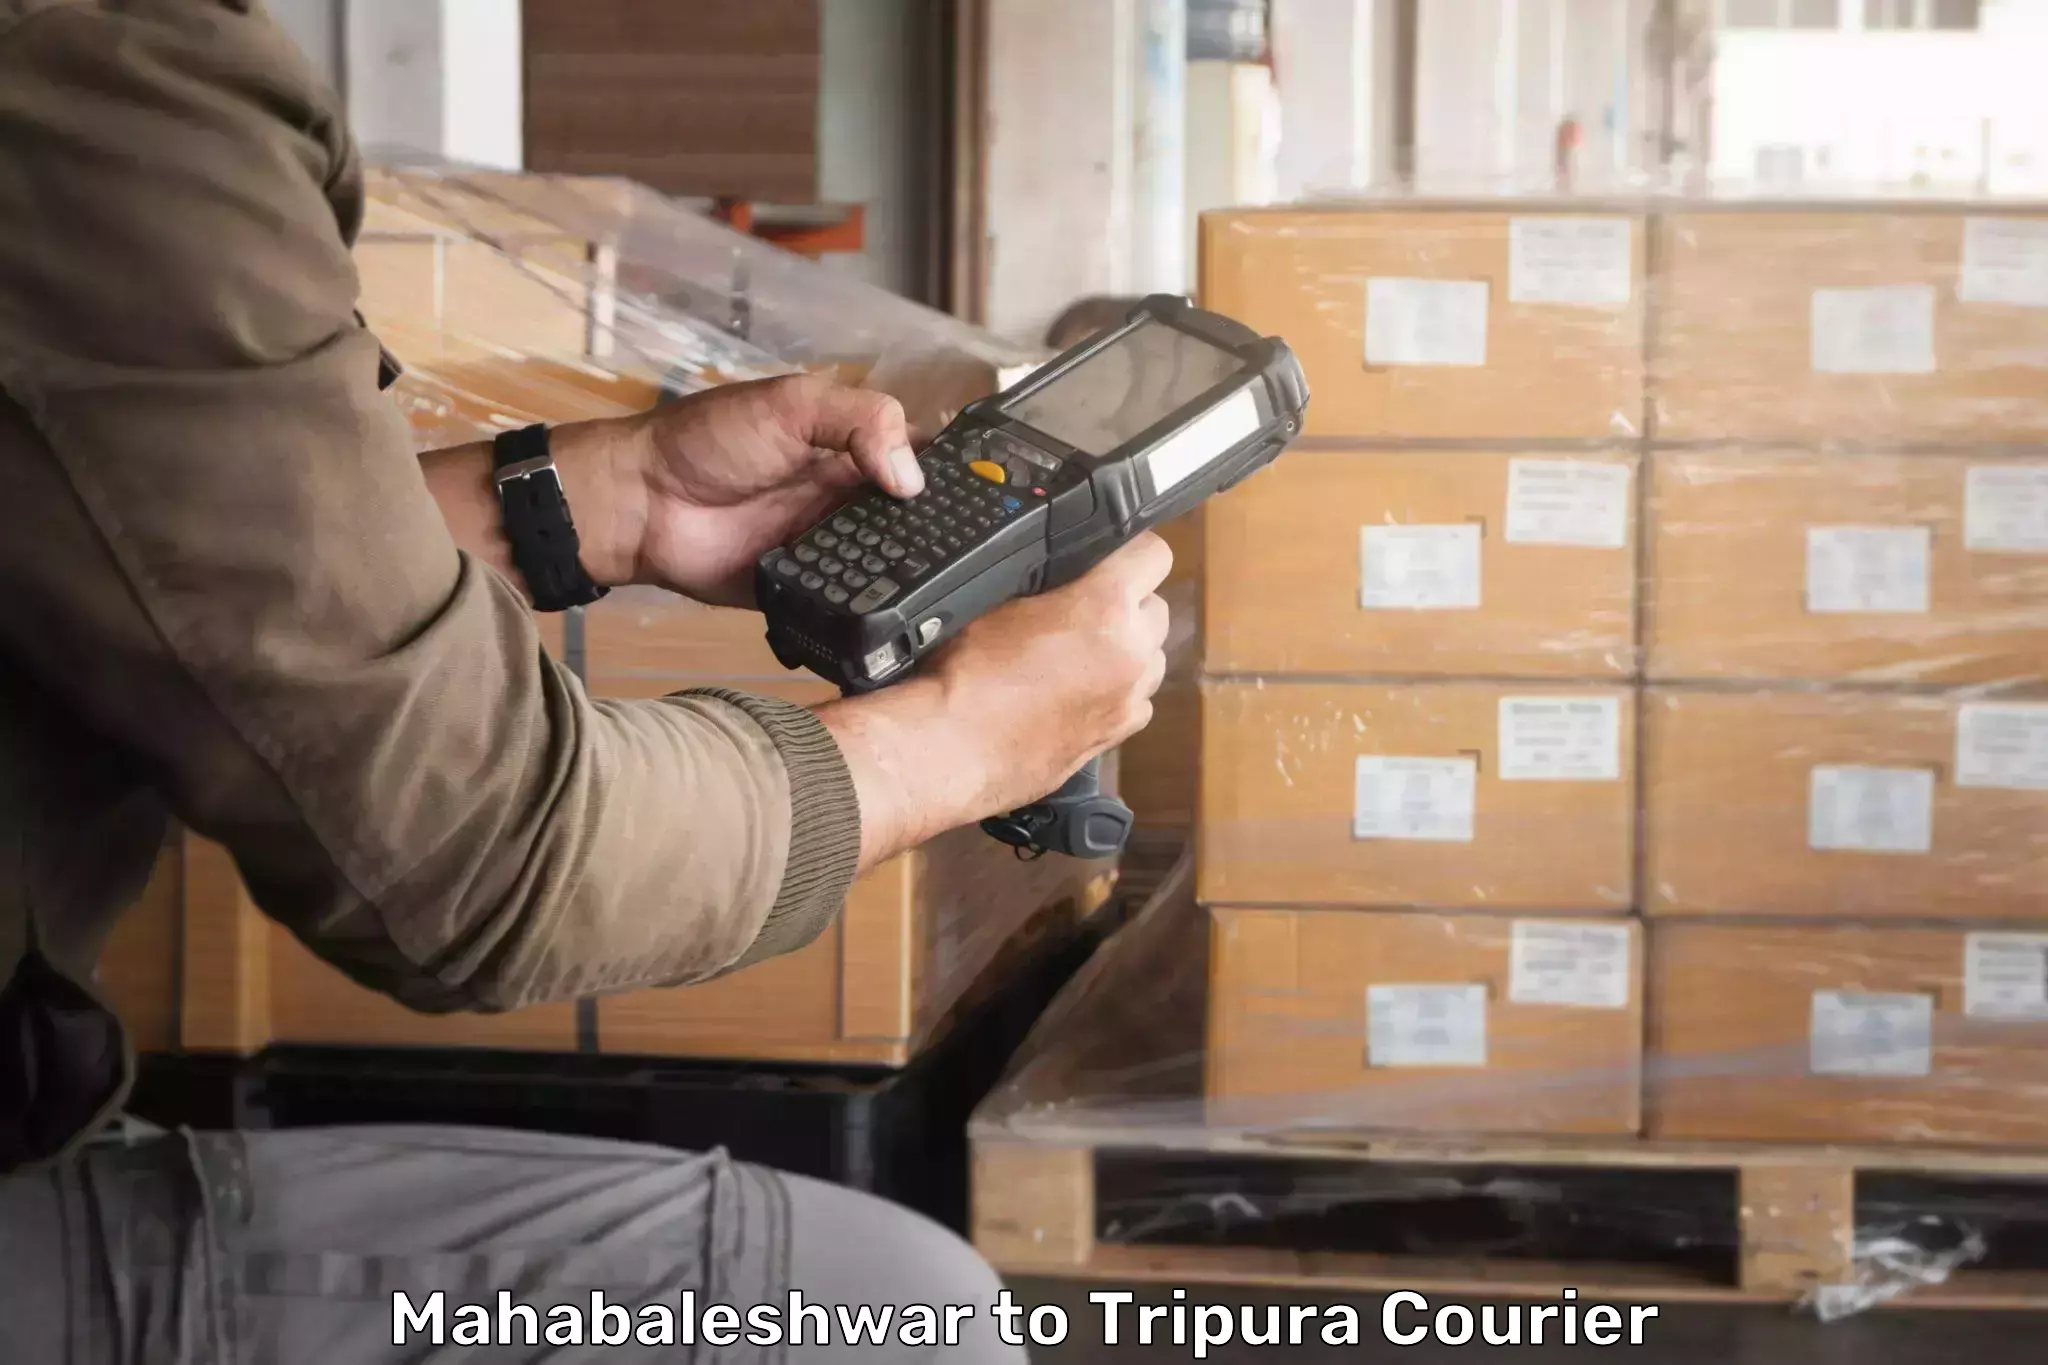 Courier service comparison Mahabaleshwar to Tripura